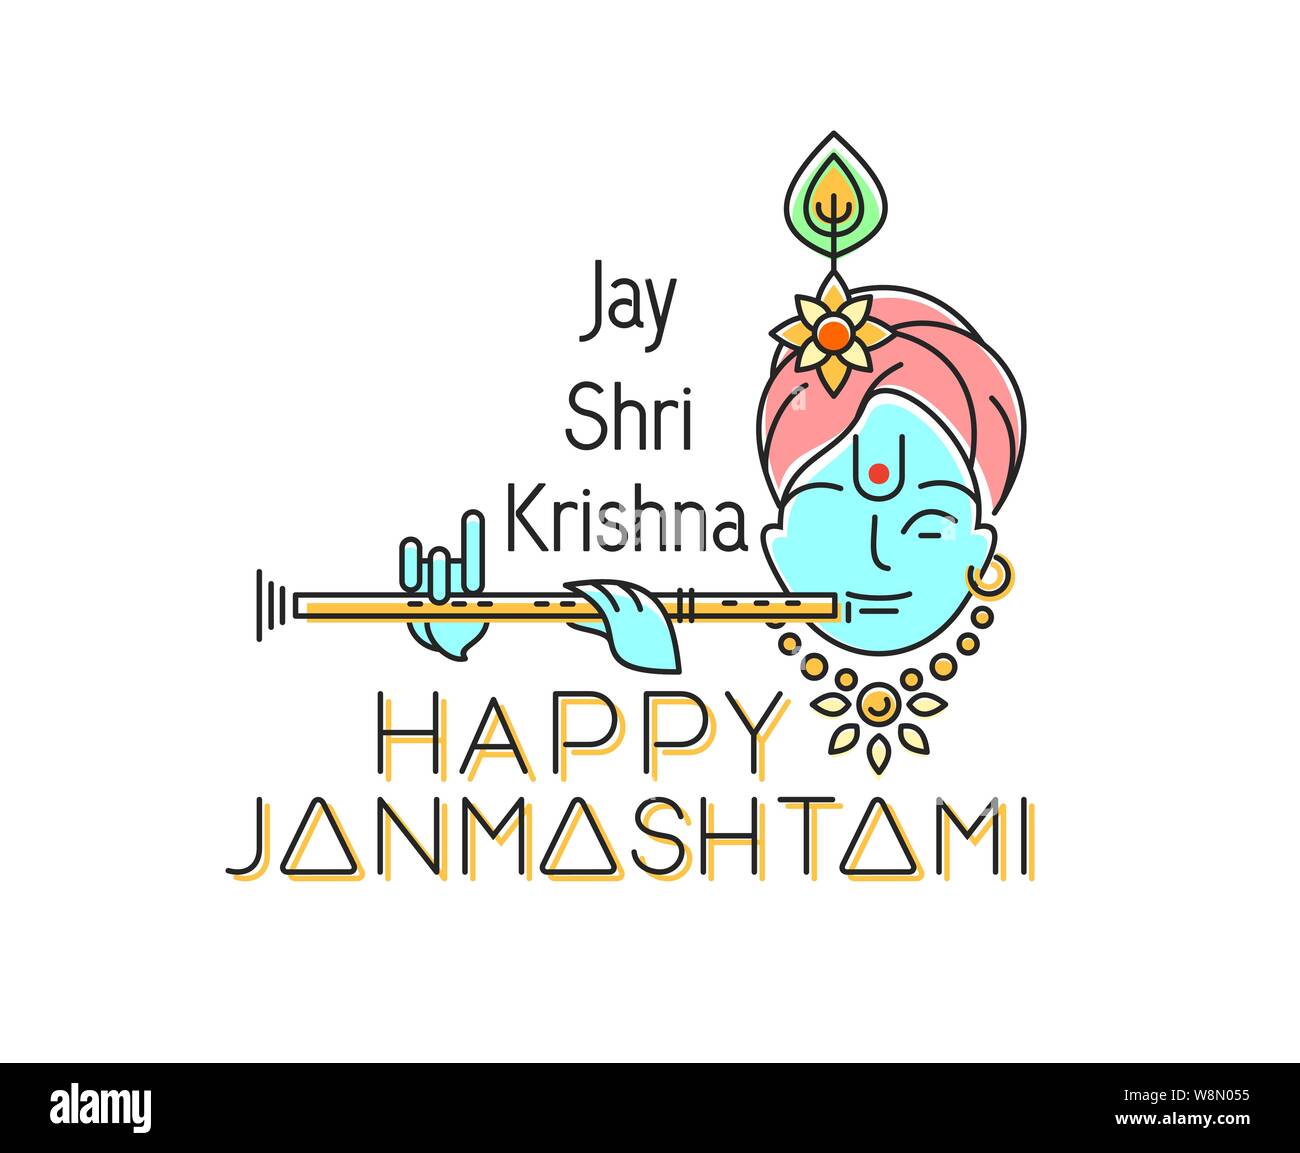 Krishna logo Vectors & Illustrations for Free Download | Freepik